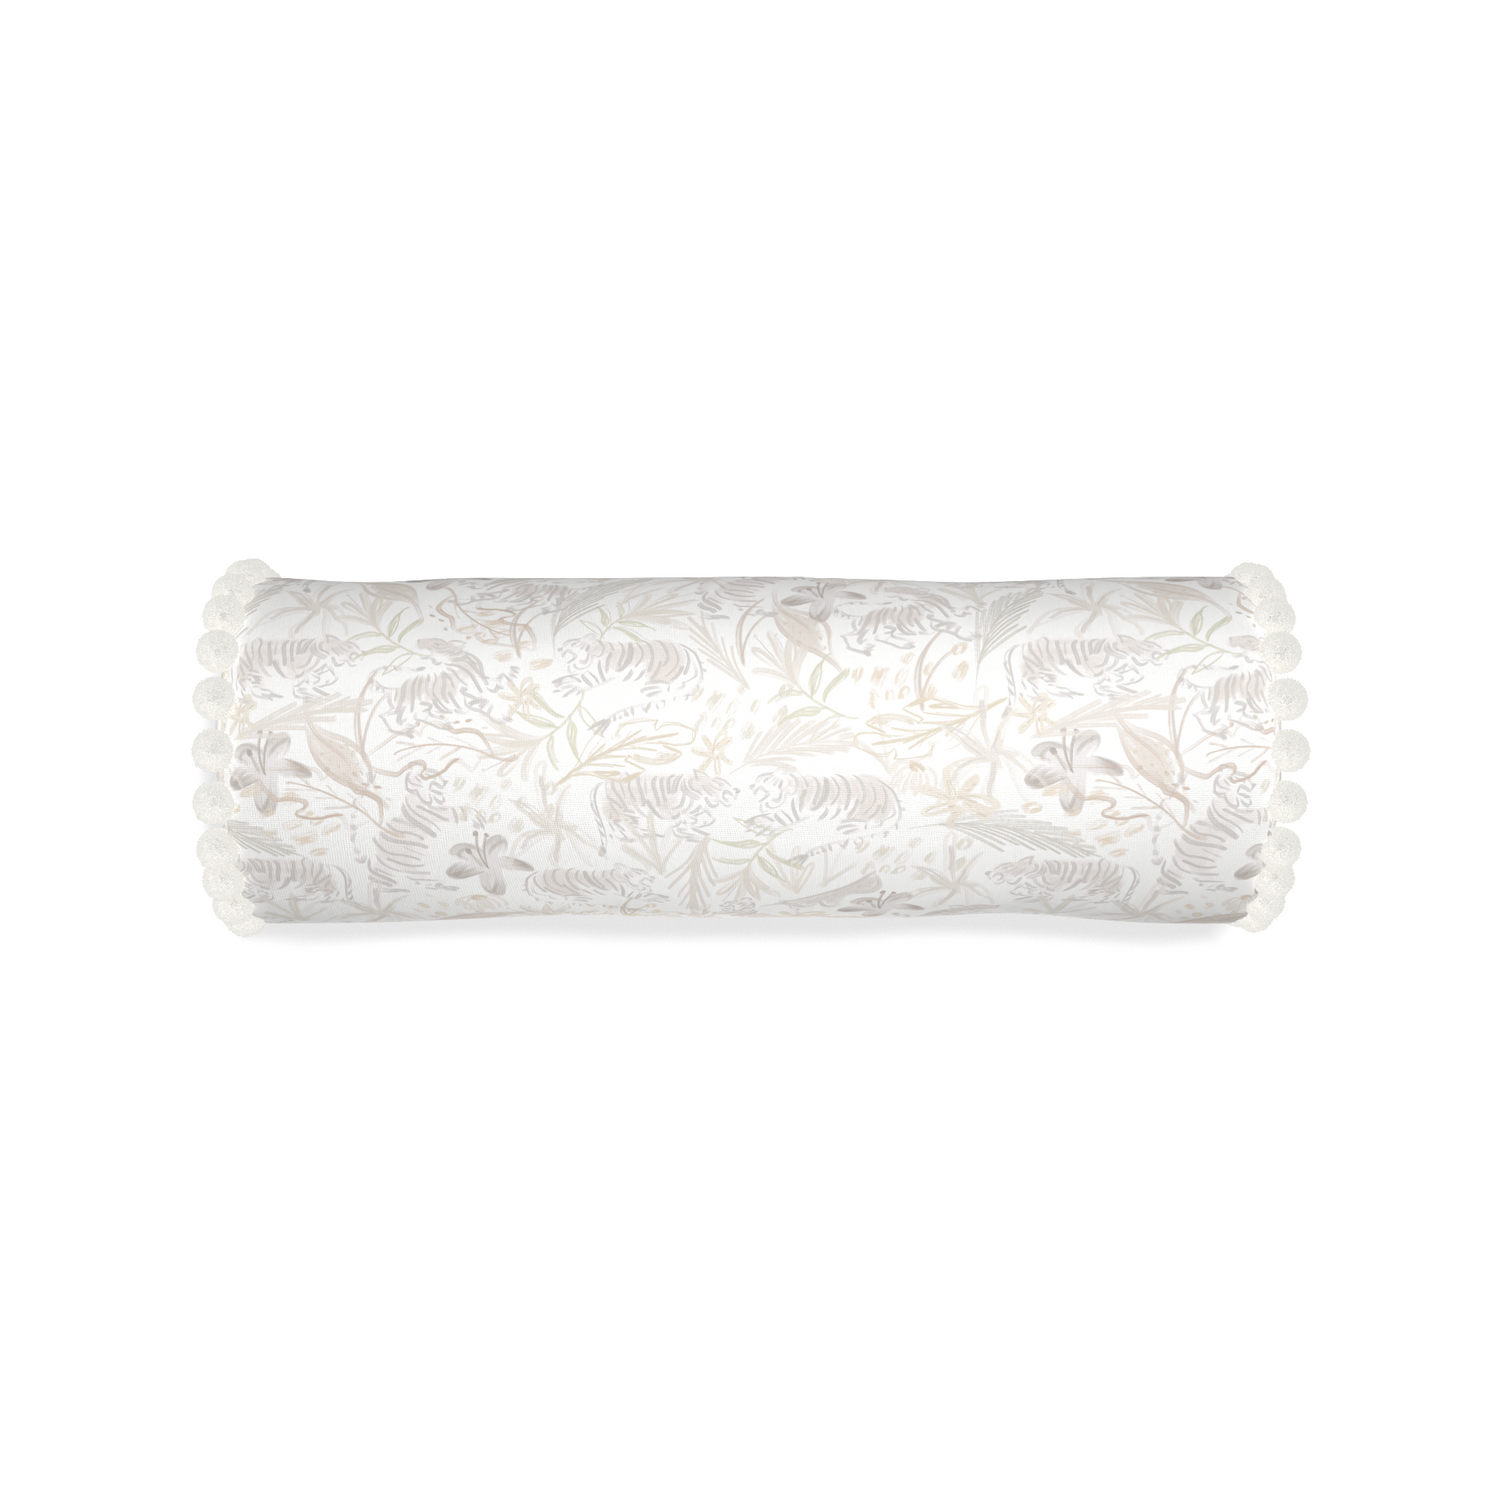 Bolster frida sand custom pillow with snow pom pom on white background